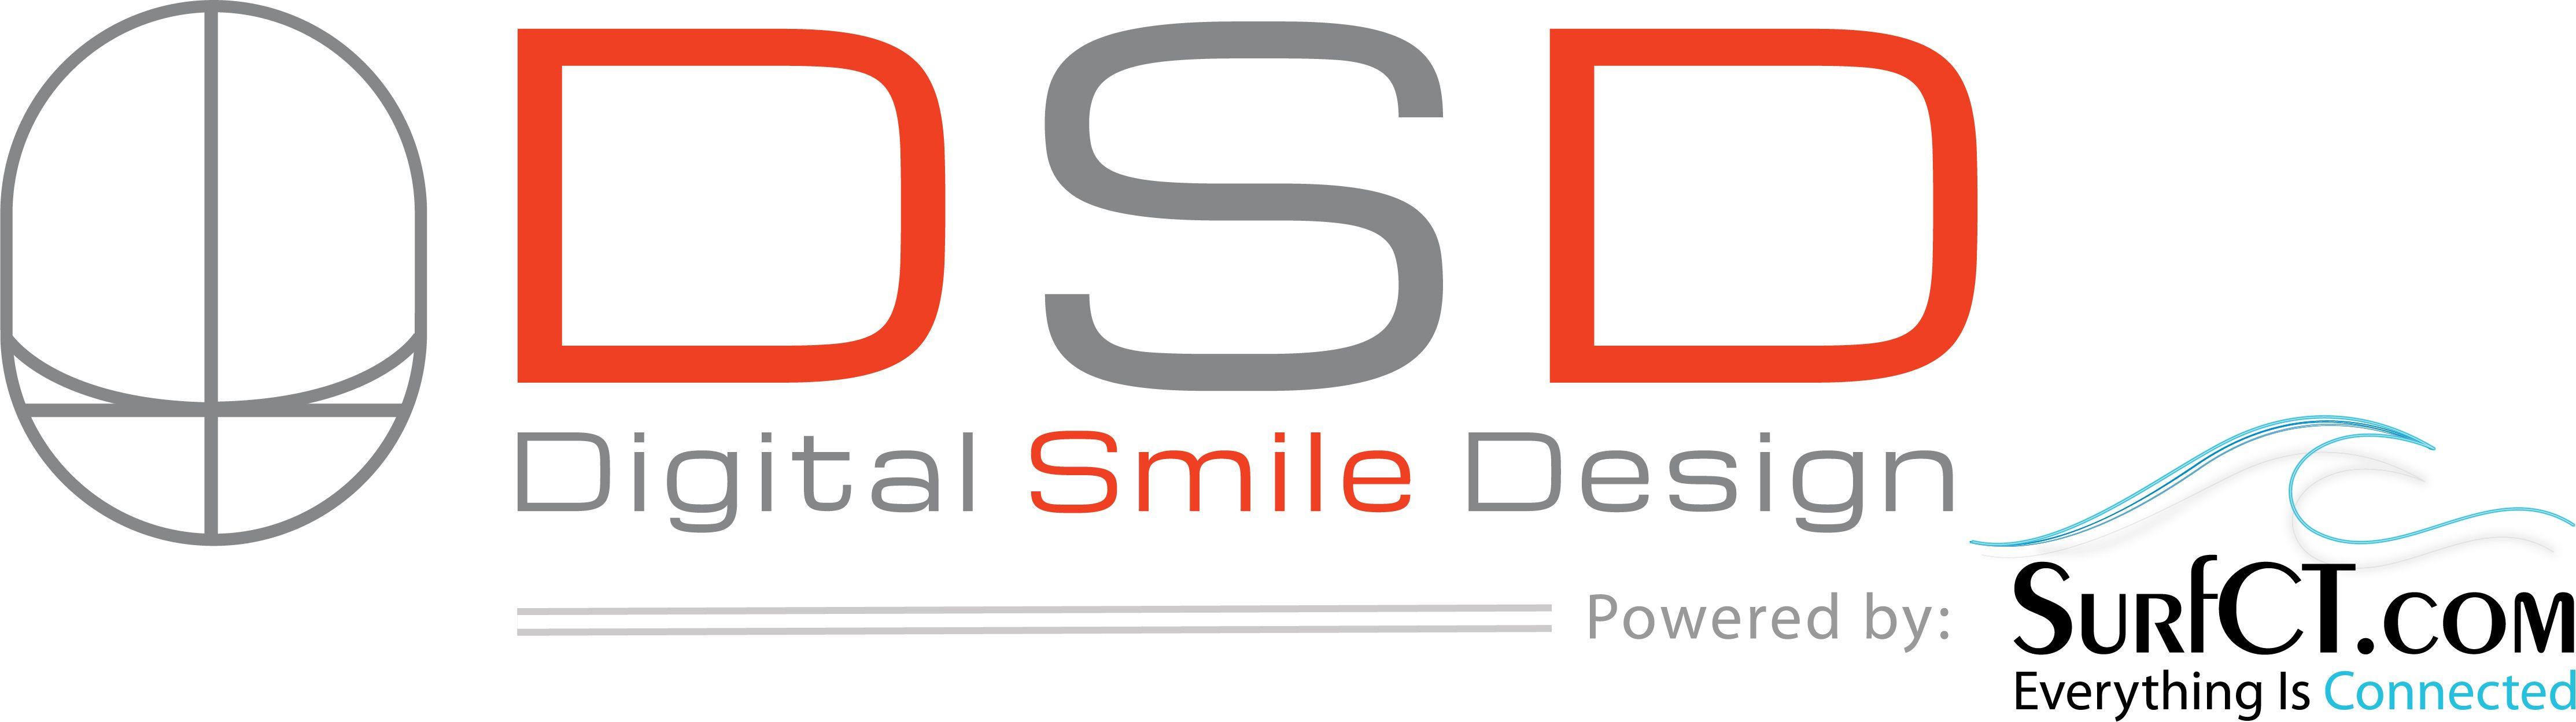 Smile by Design Logo - Digital Smile Design Powered by SurfCT | Surf Computer Technologies